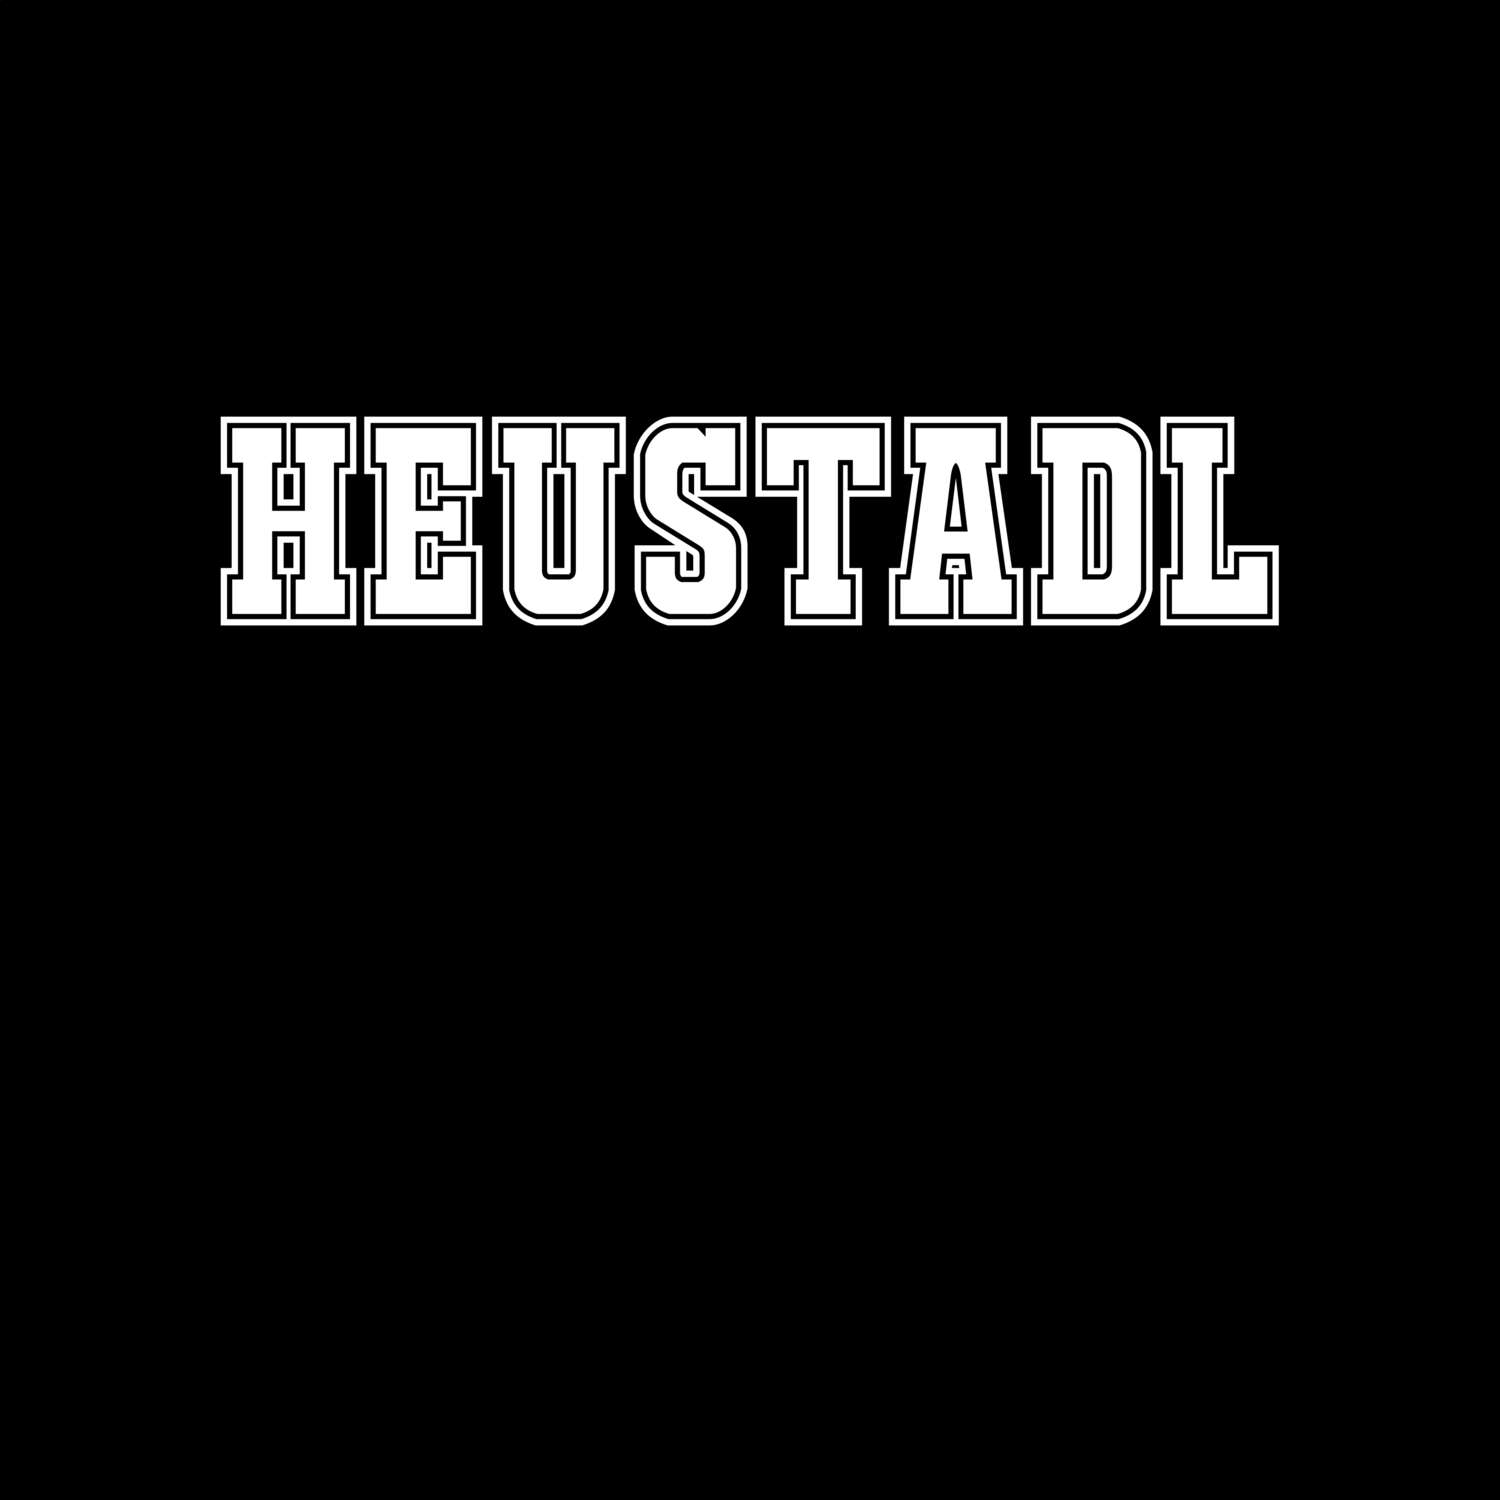 Heustadl T-Shirt »Classic«